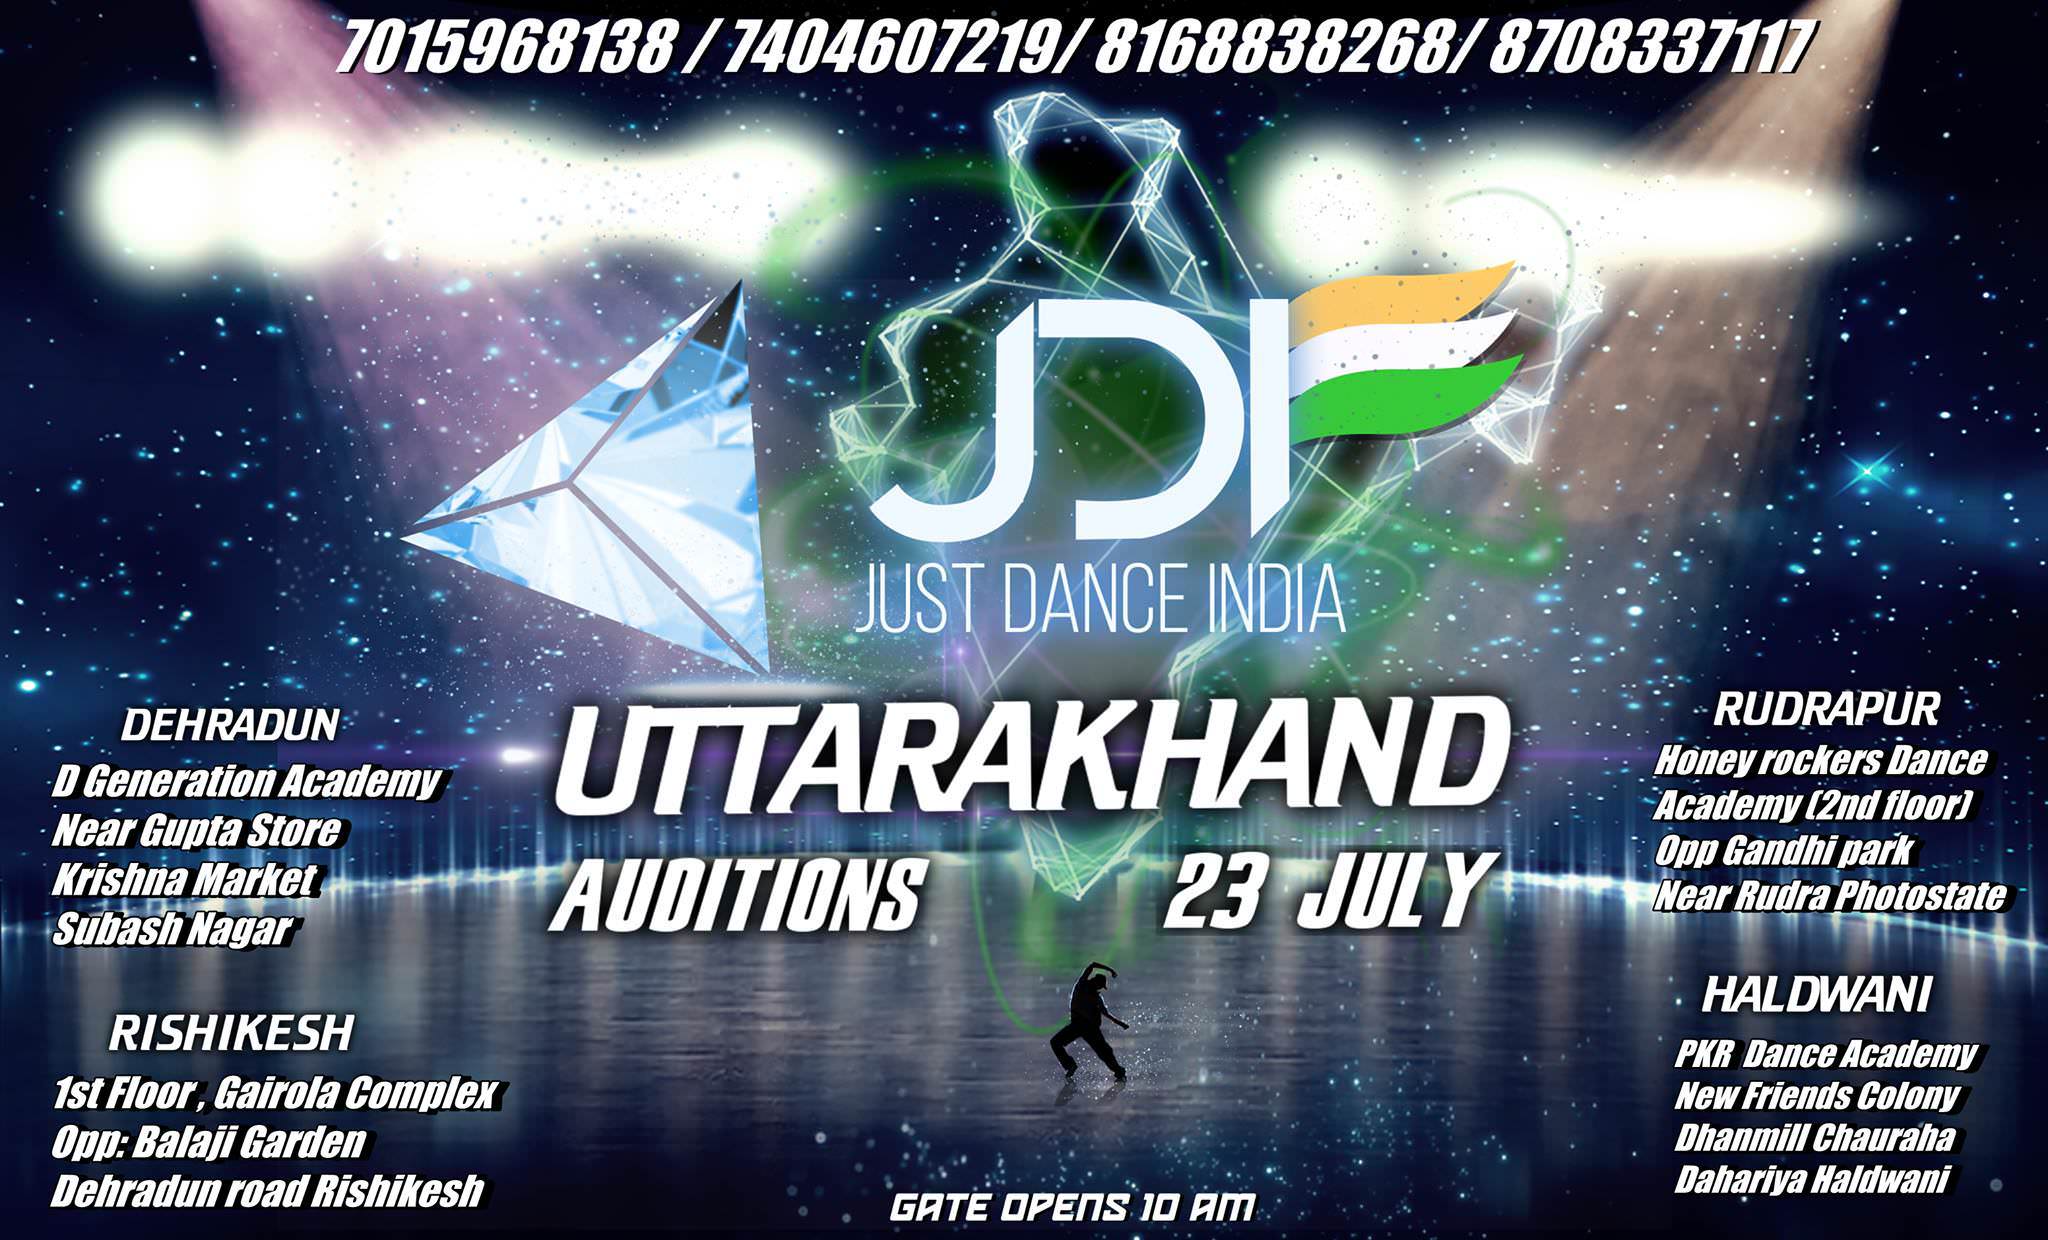 Just Dance India Championship Season 2 Uttarakhand Auditions